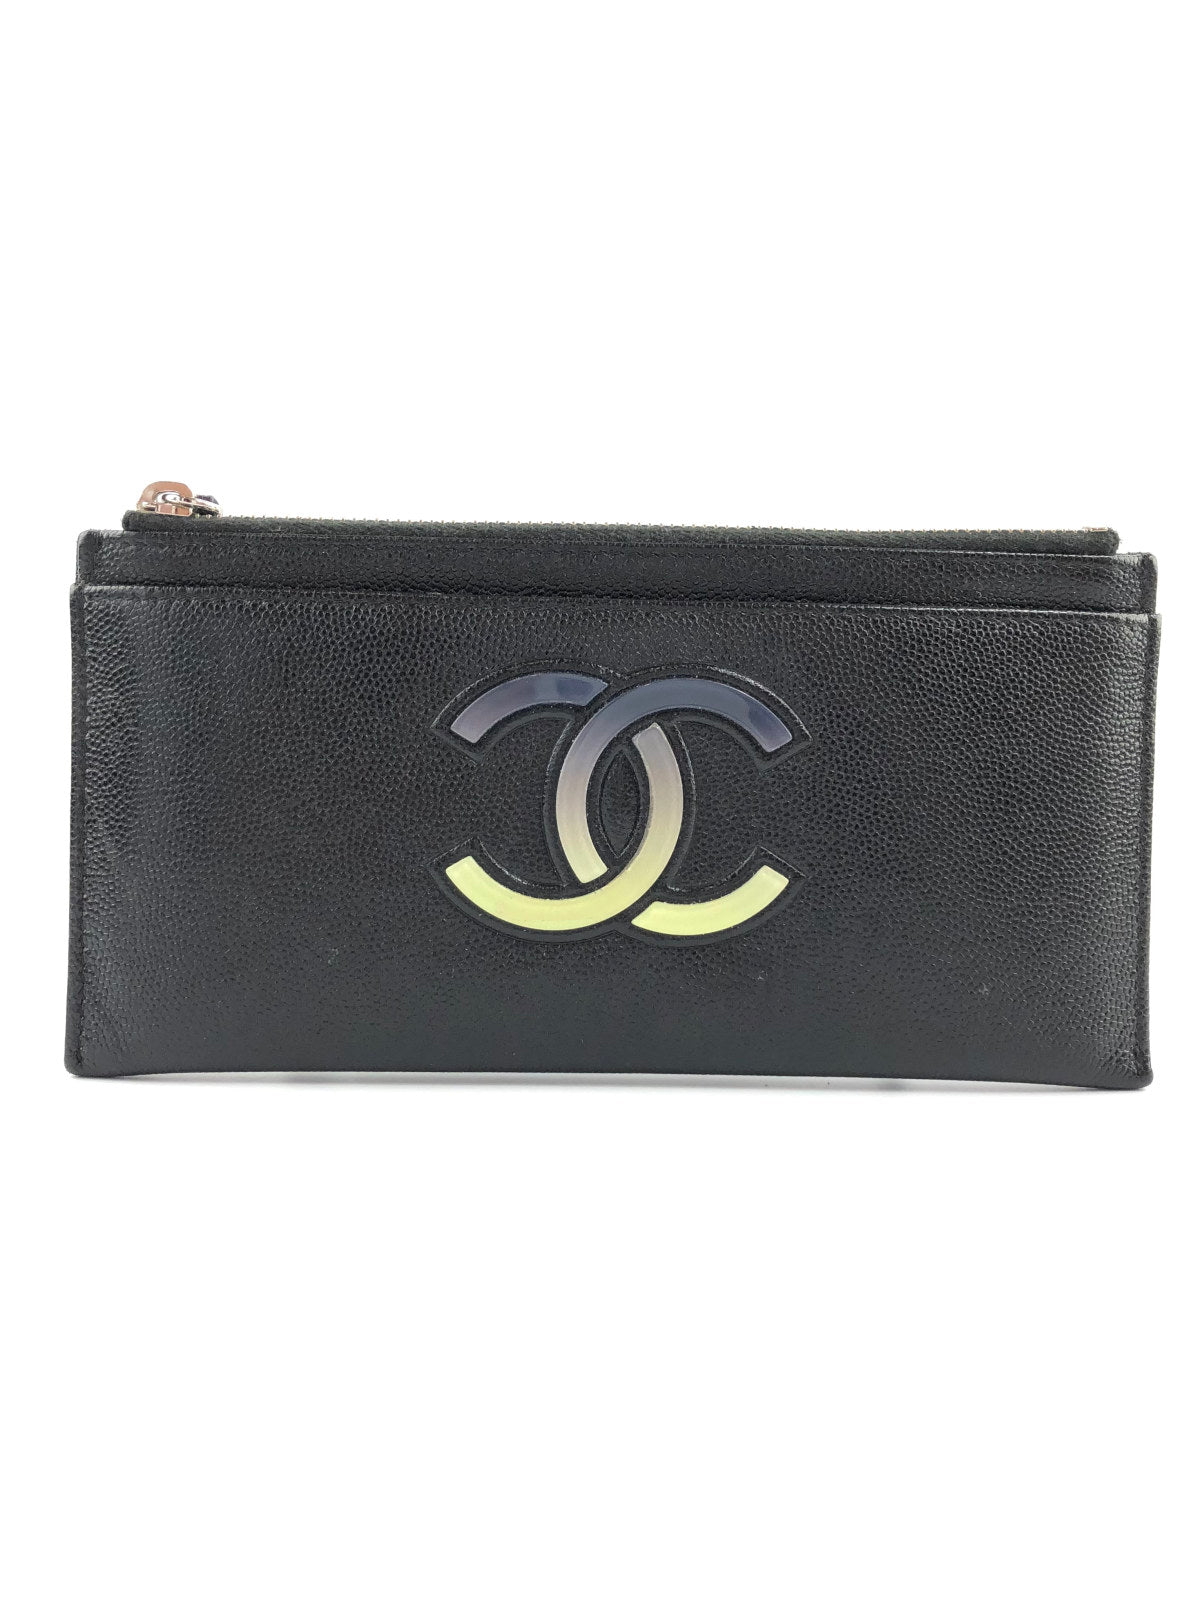 CHANEL Black Caviar Leather Zip Pouch Gradient Wallet - The Purse Ladies